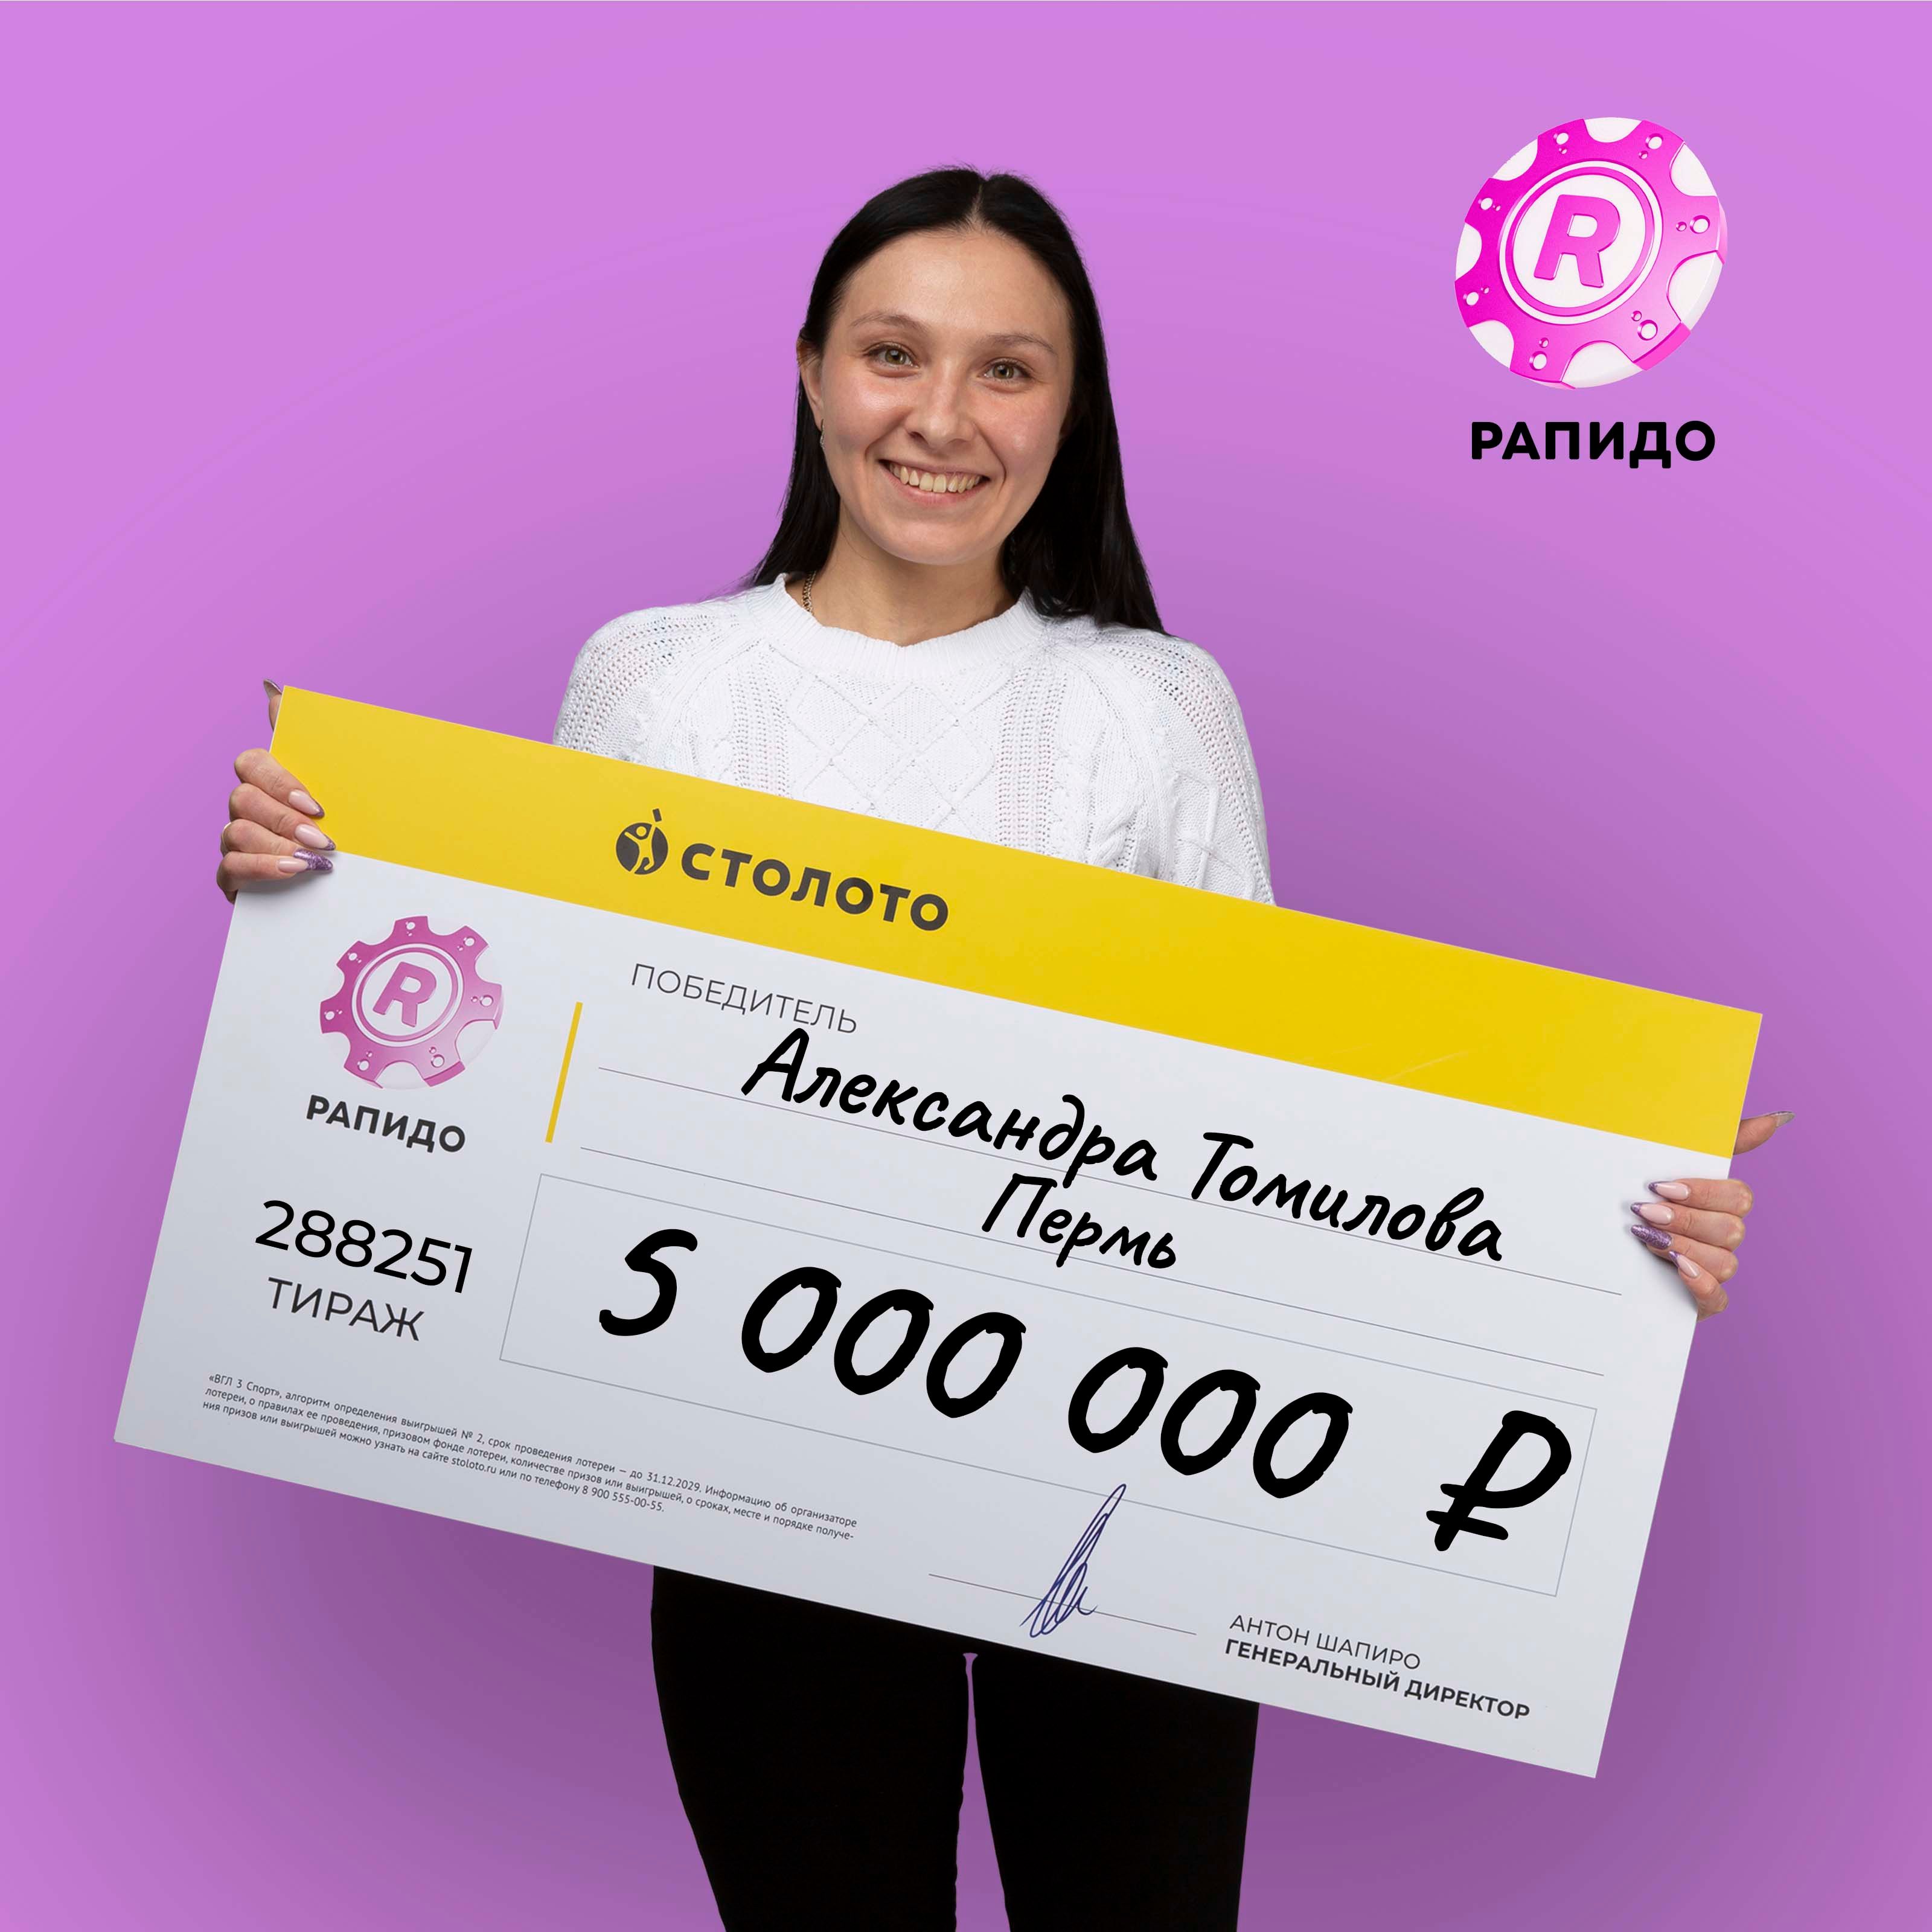 Александра Томилова, победитель лотереи «Рапидо»